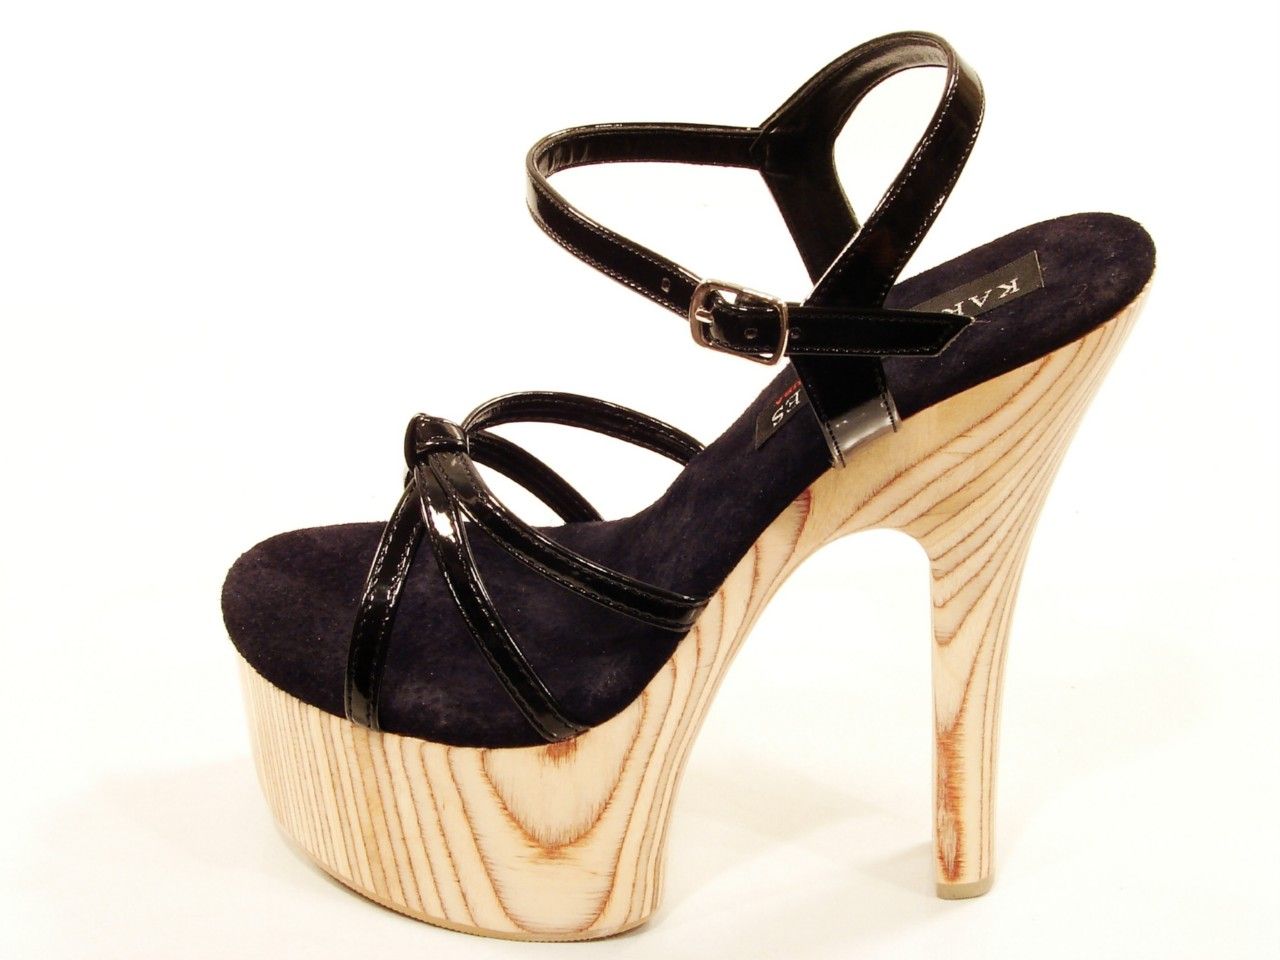 Karo Shoes 3291 High Heel Wood Platform Strappy Sandal in Black Patent